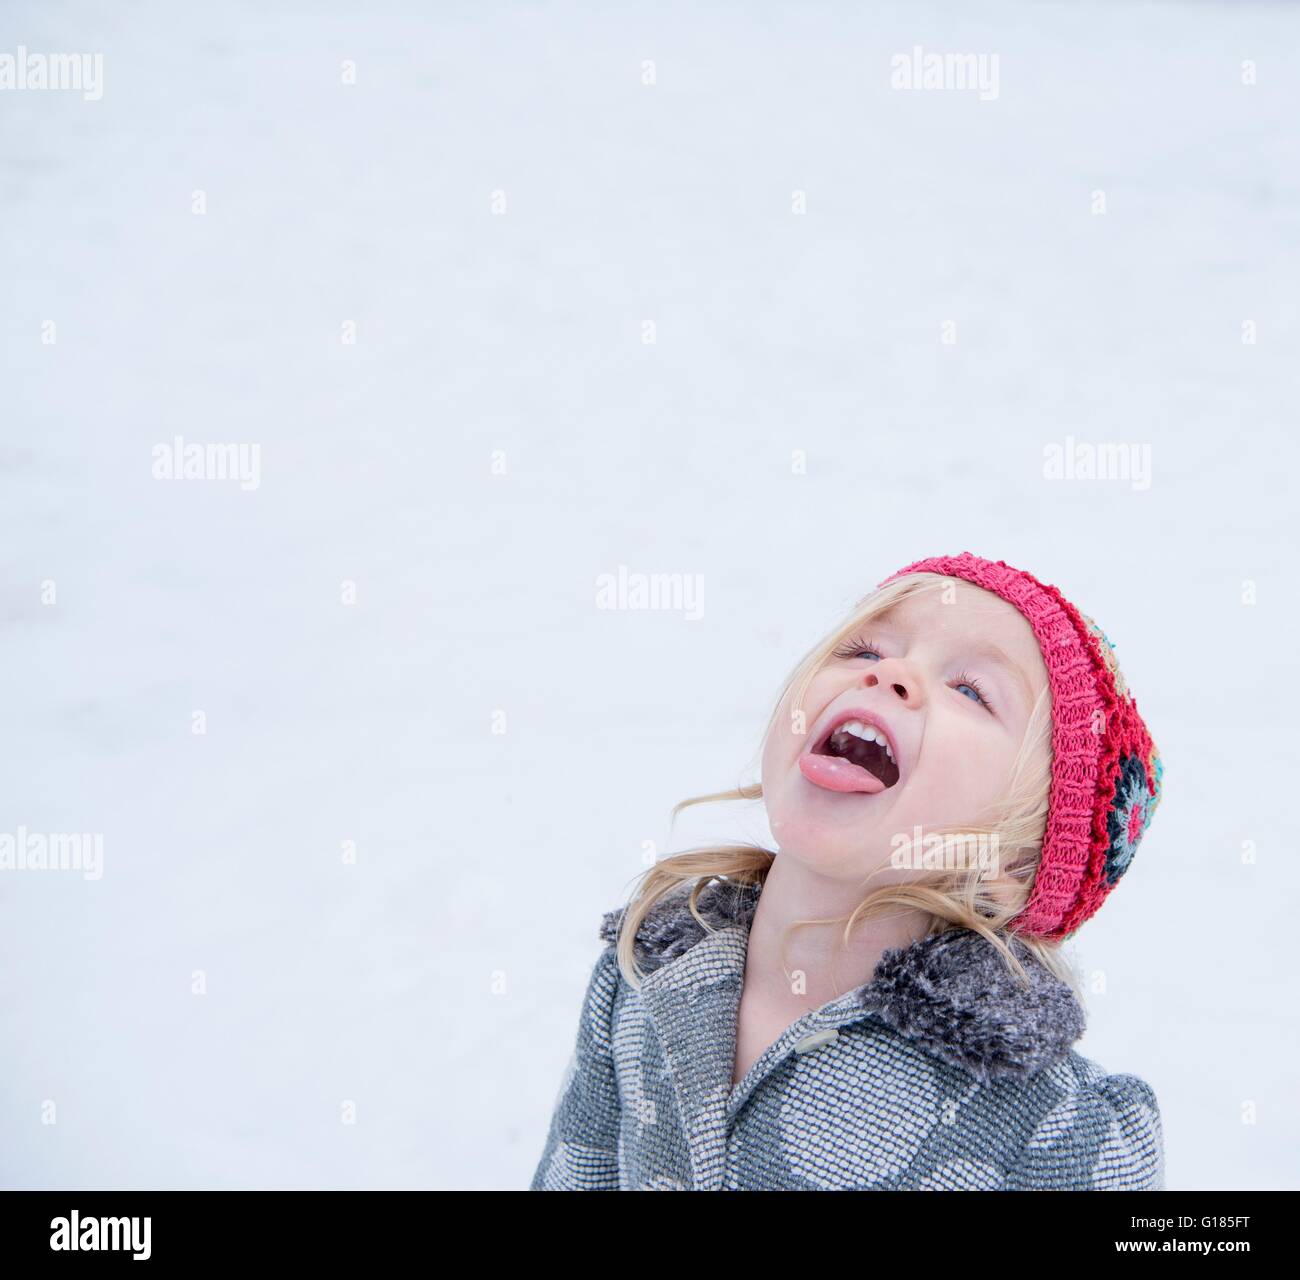 Toddler sticking out tongue to taste snow Stock Photo